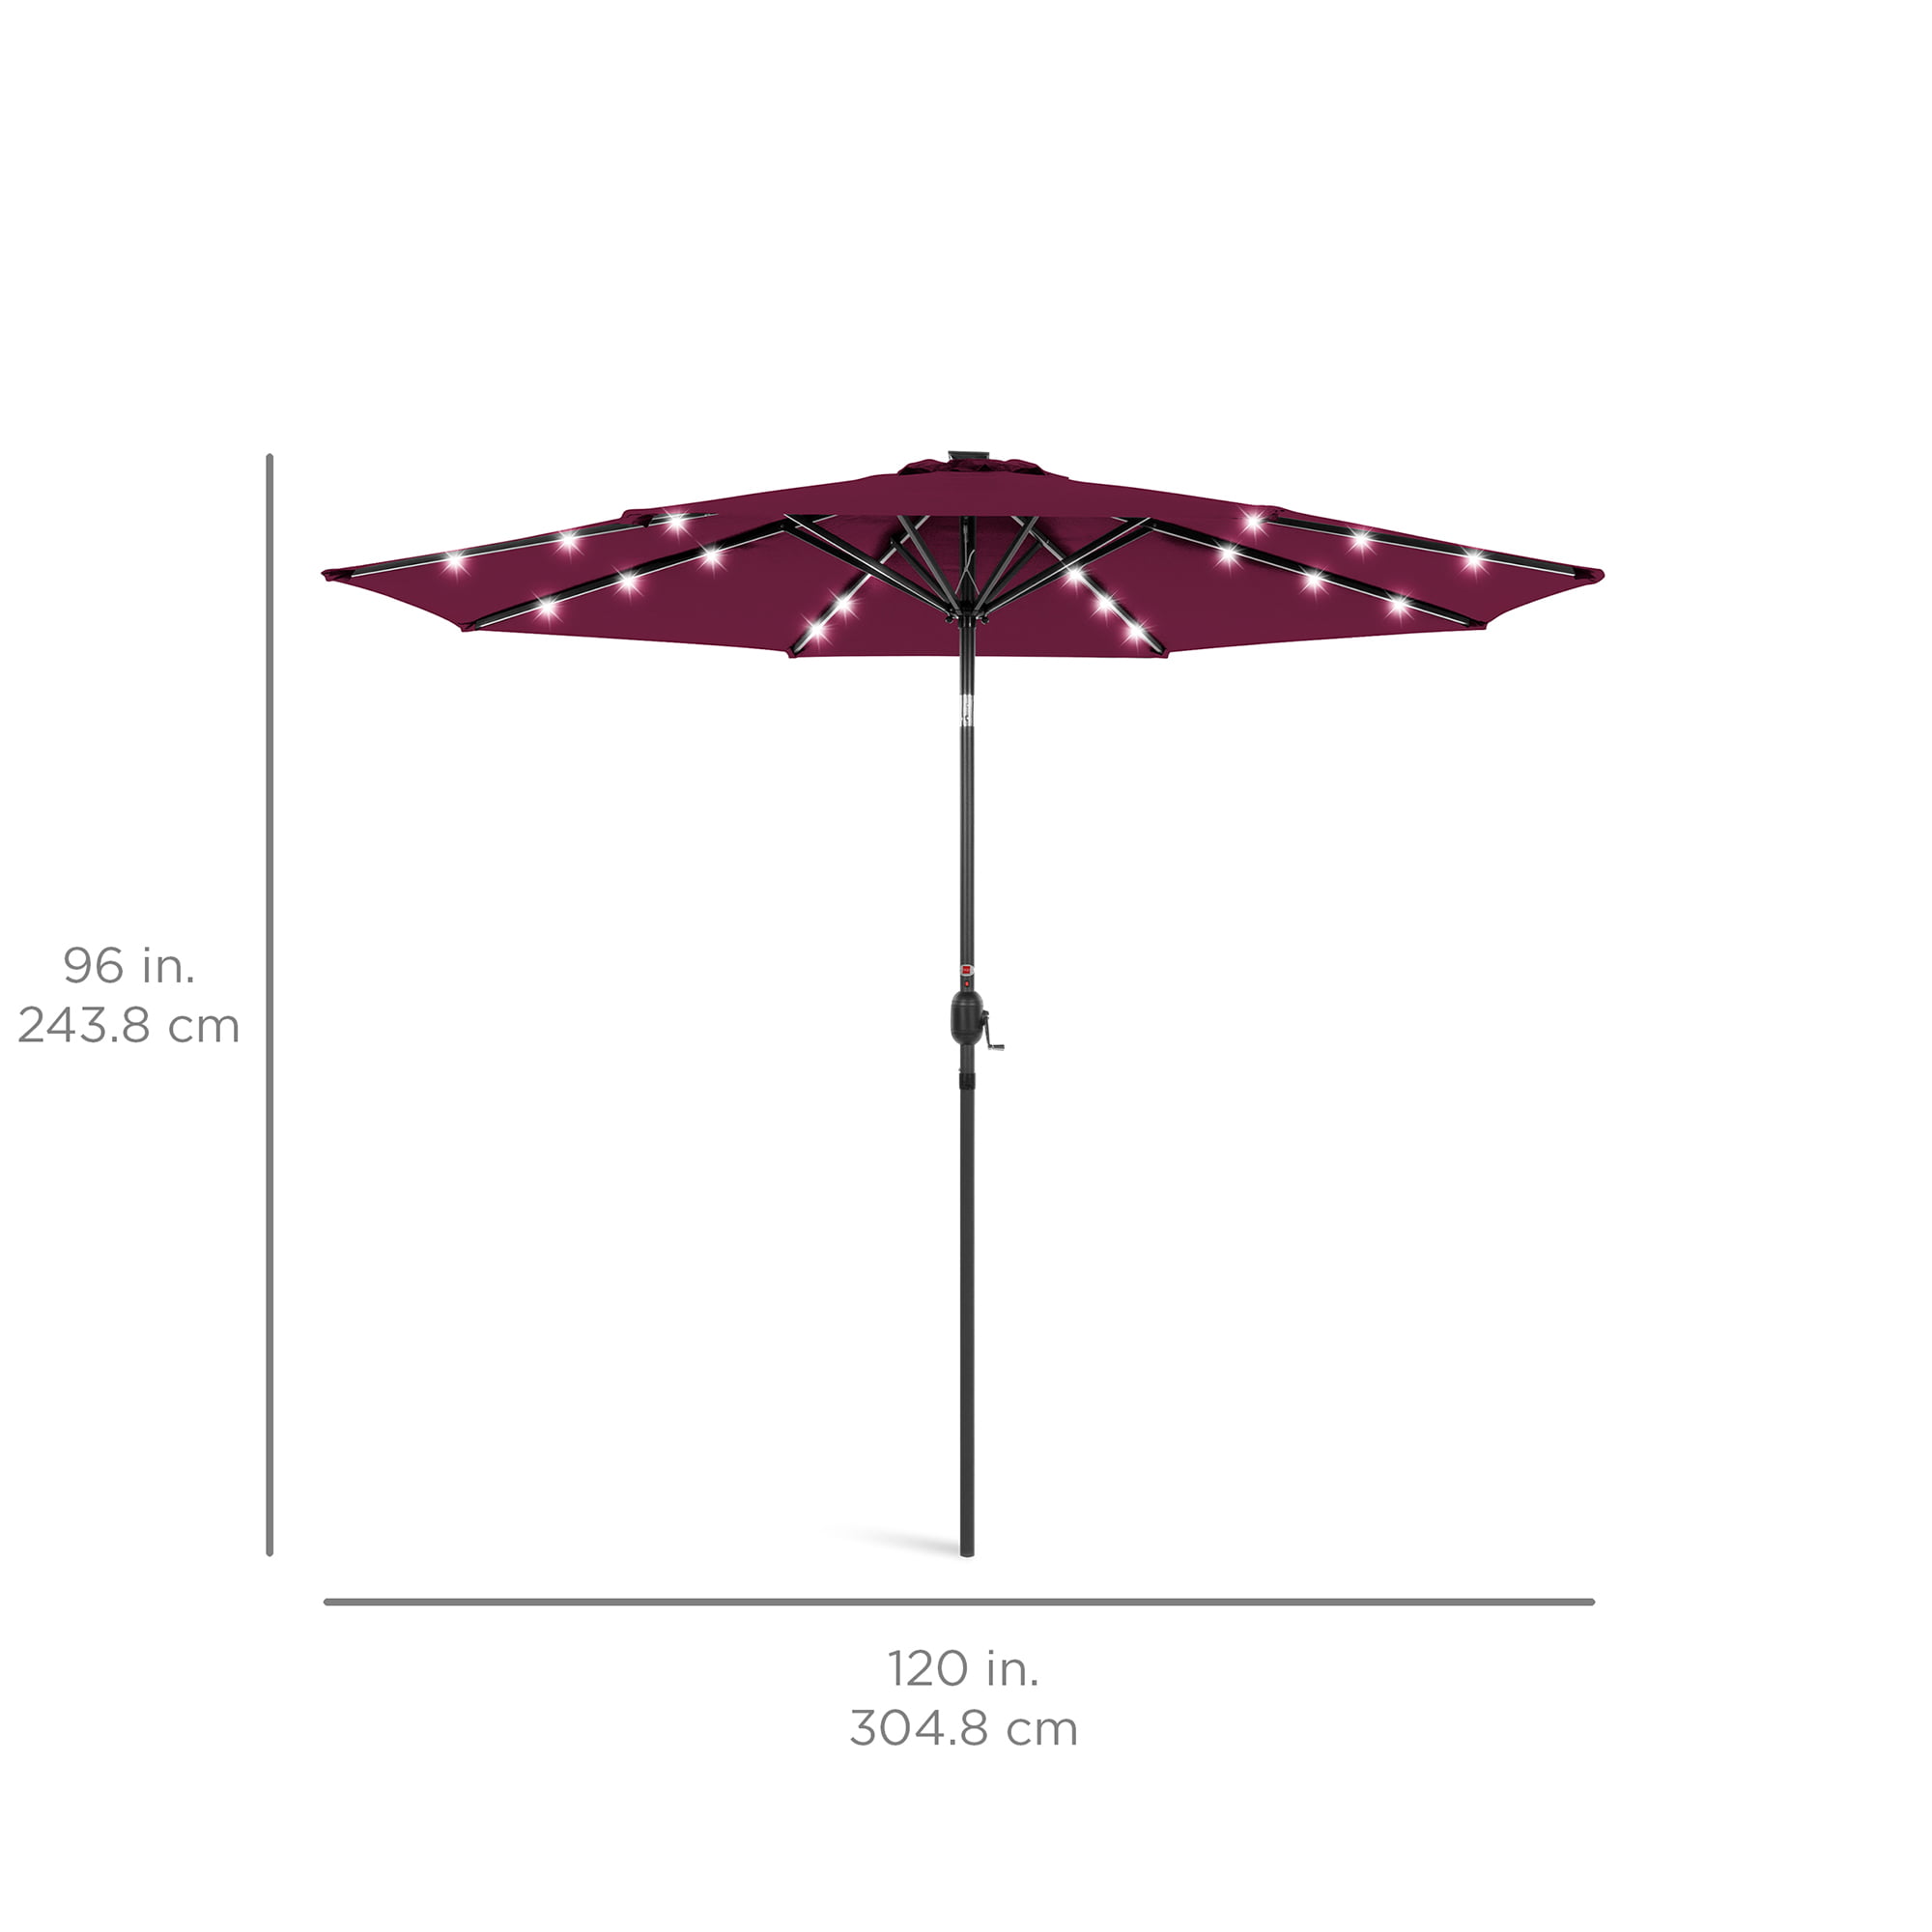 10ft solar led lighted patio umbrella